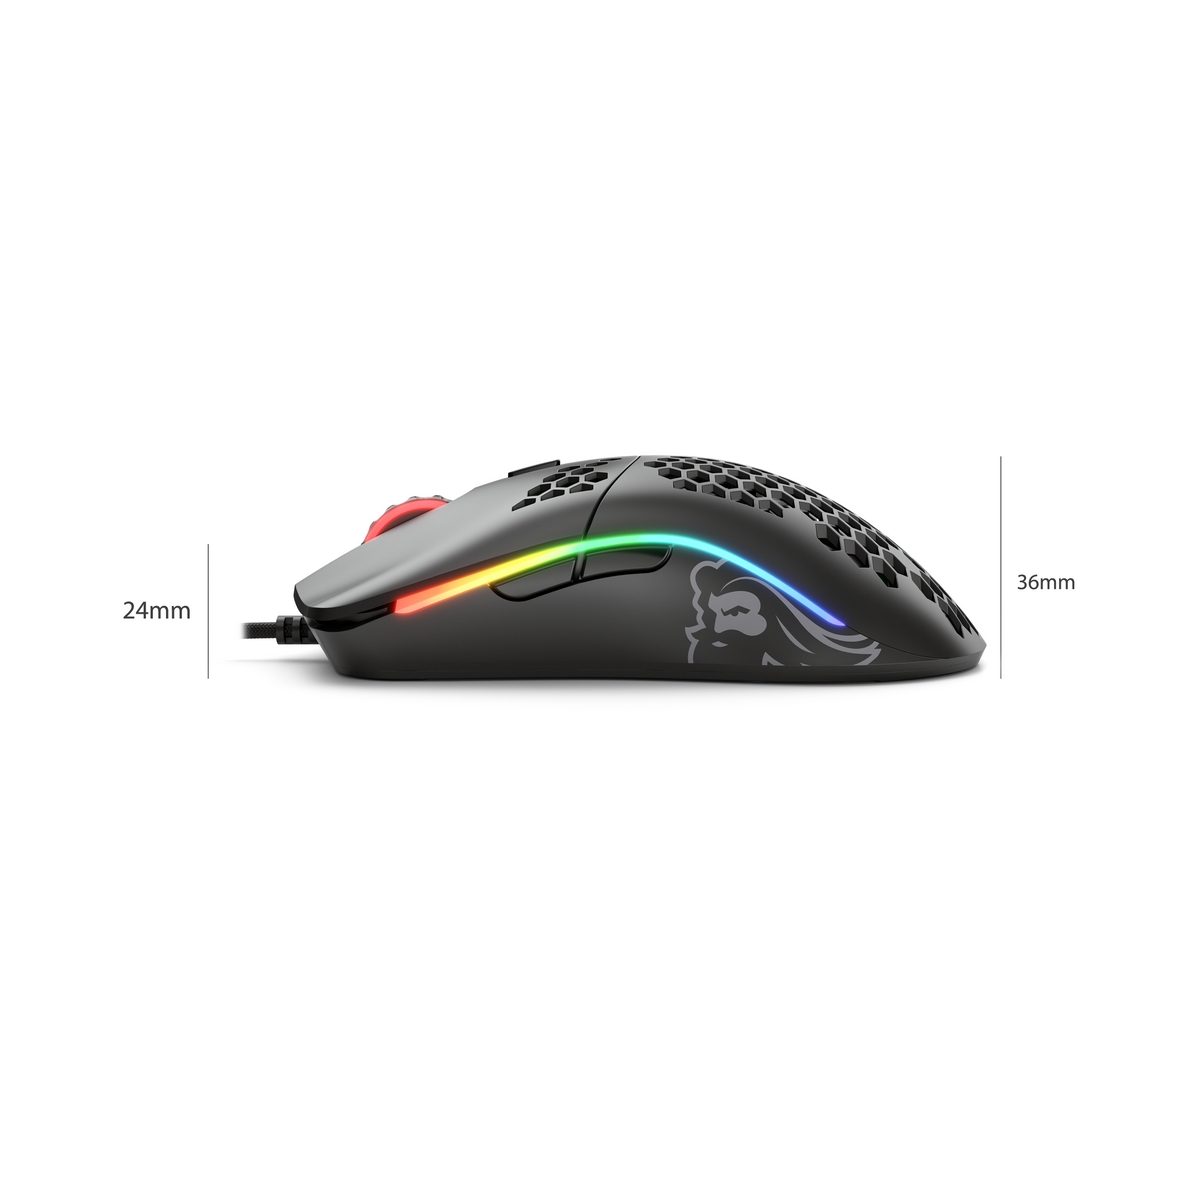 Glorious - Glorious Model O- USB RGB Odin Optical Gaming Mouse - Glossy Black (GOM-GBLACK)